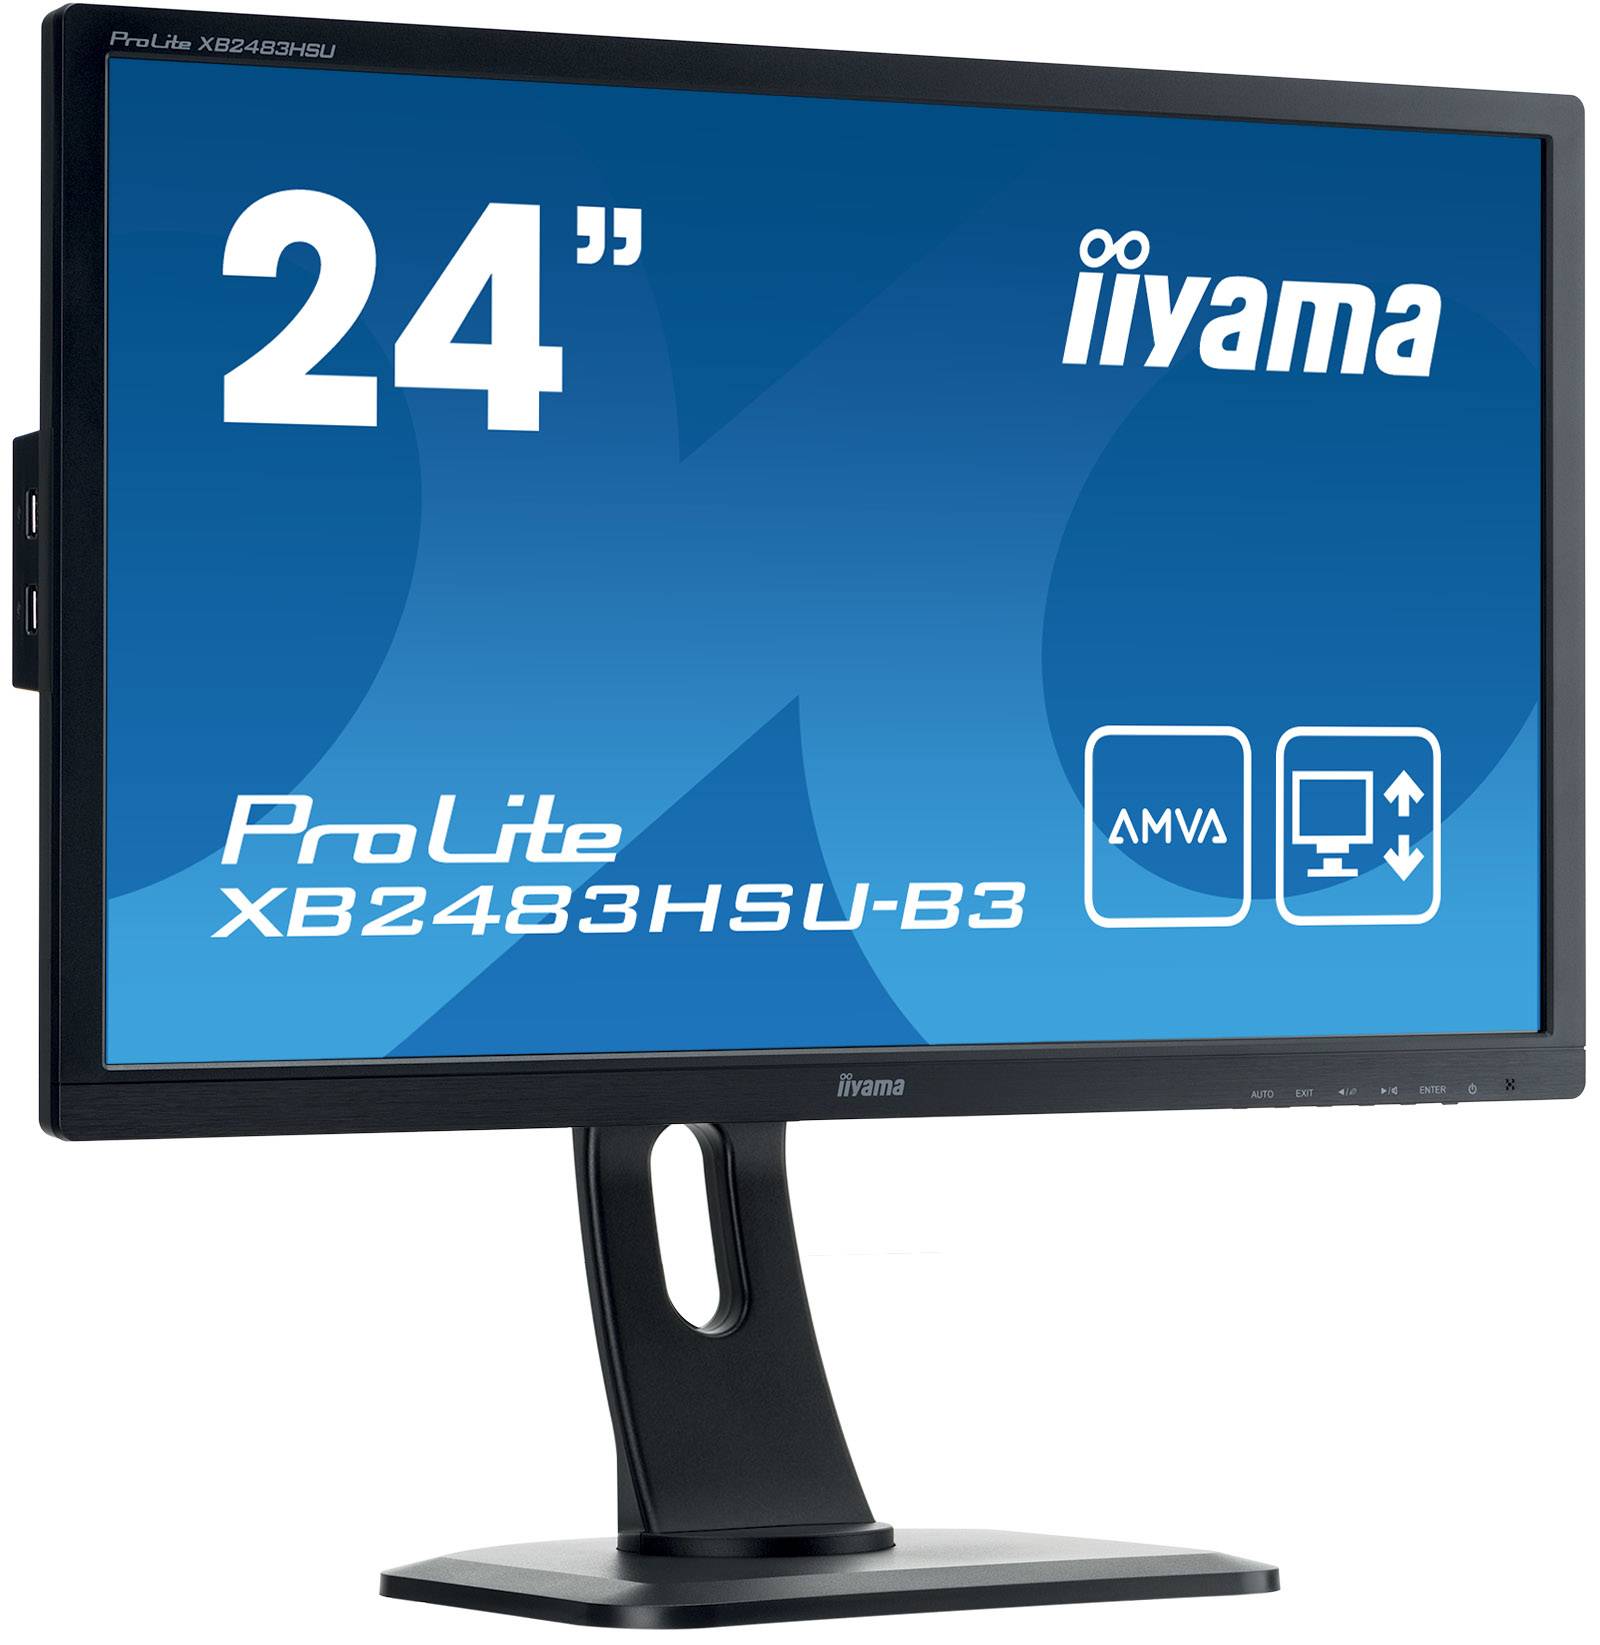 Rca Informatique - image du produit : XB2483HSU-B3 C 3000:1 VGA HDMI 238IN LCD 1920 X 1080 16:9 4MS